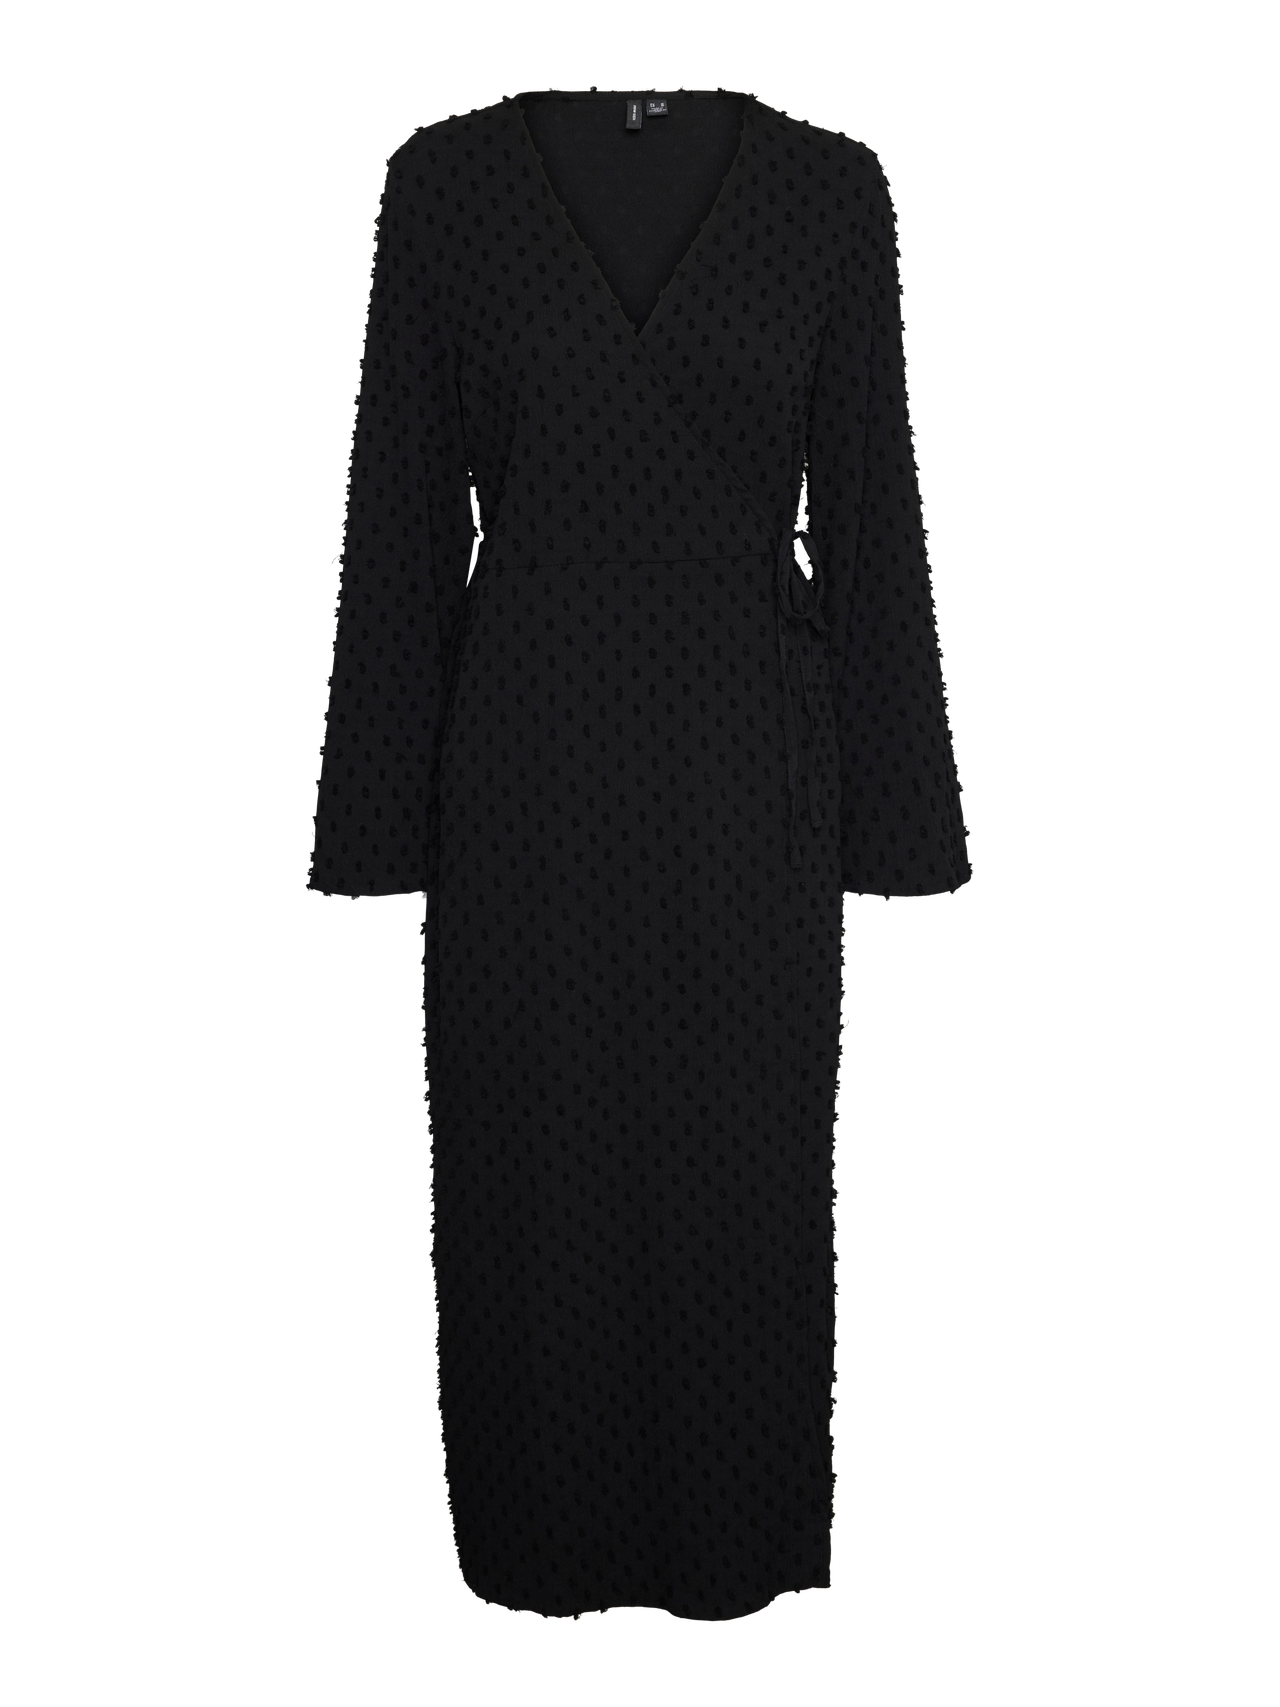 Vero Moda VMVILLA Long dress -Black - 10314042